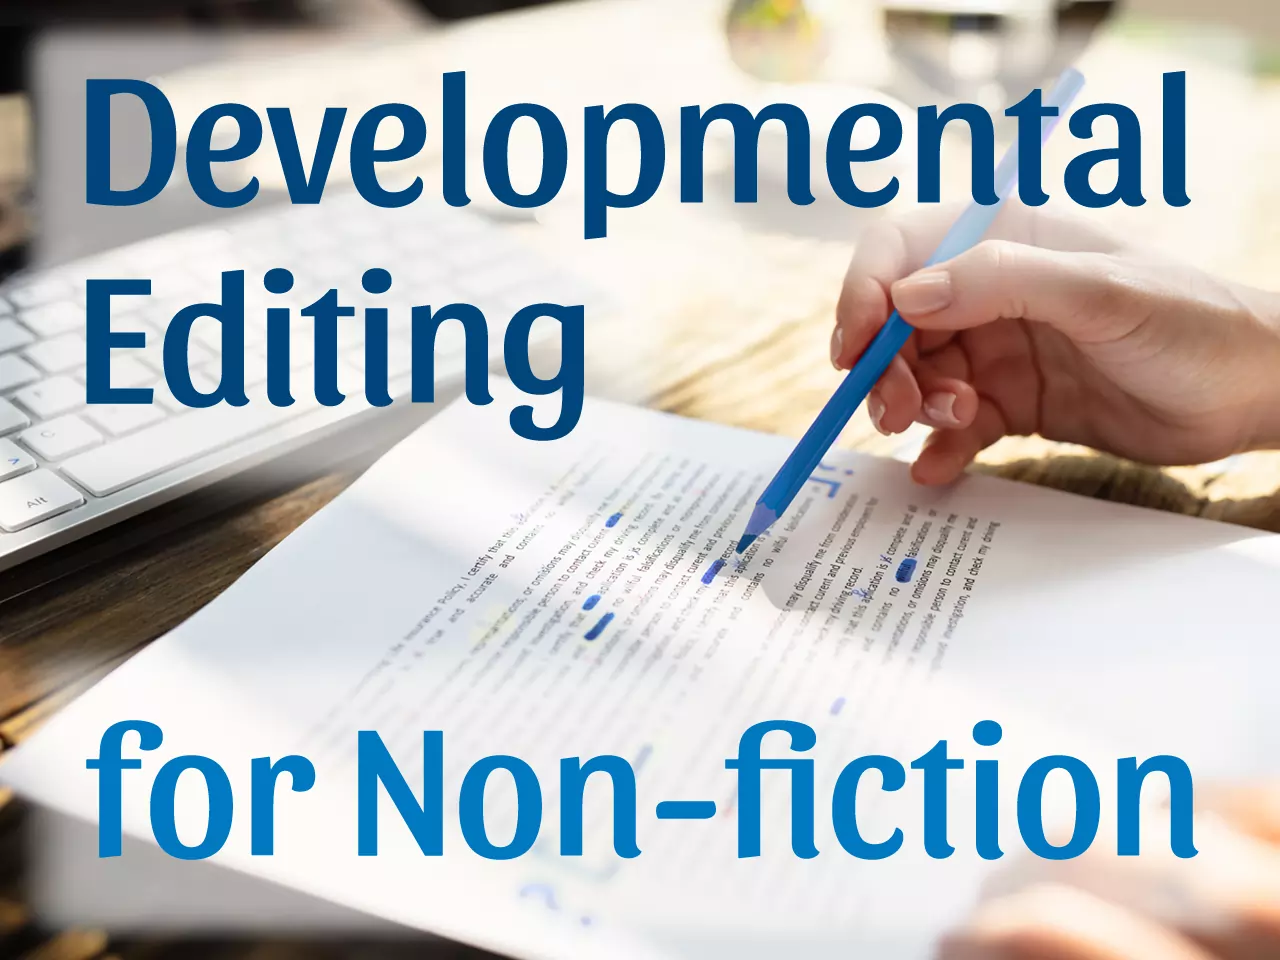 Developmental Editing for Non-fiction